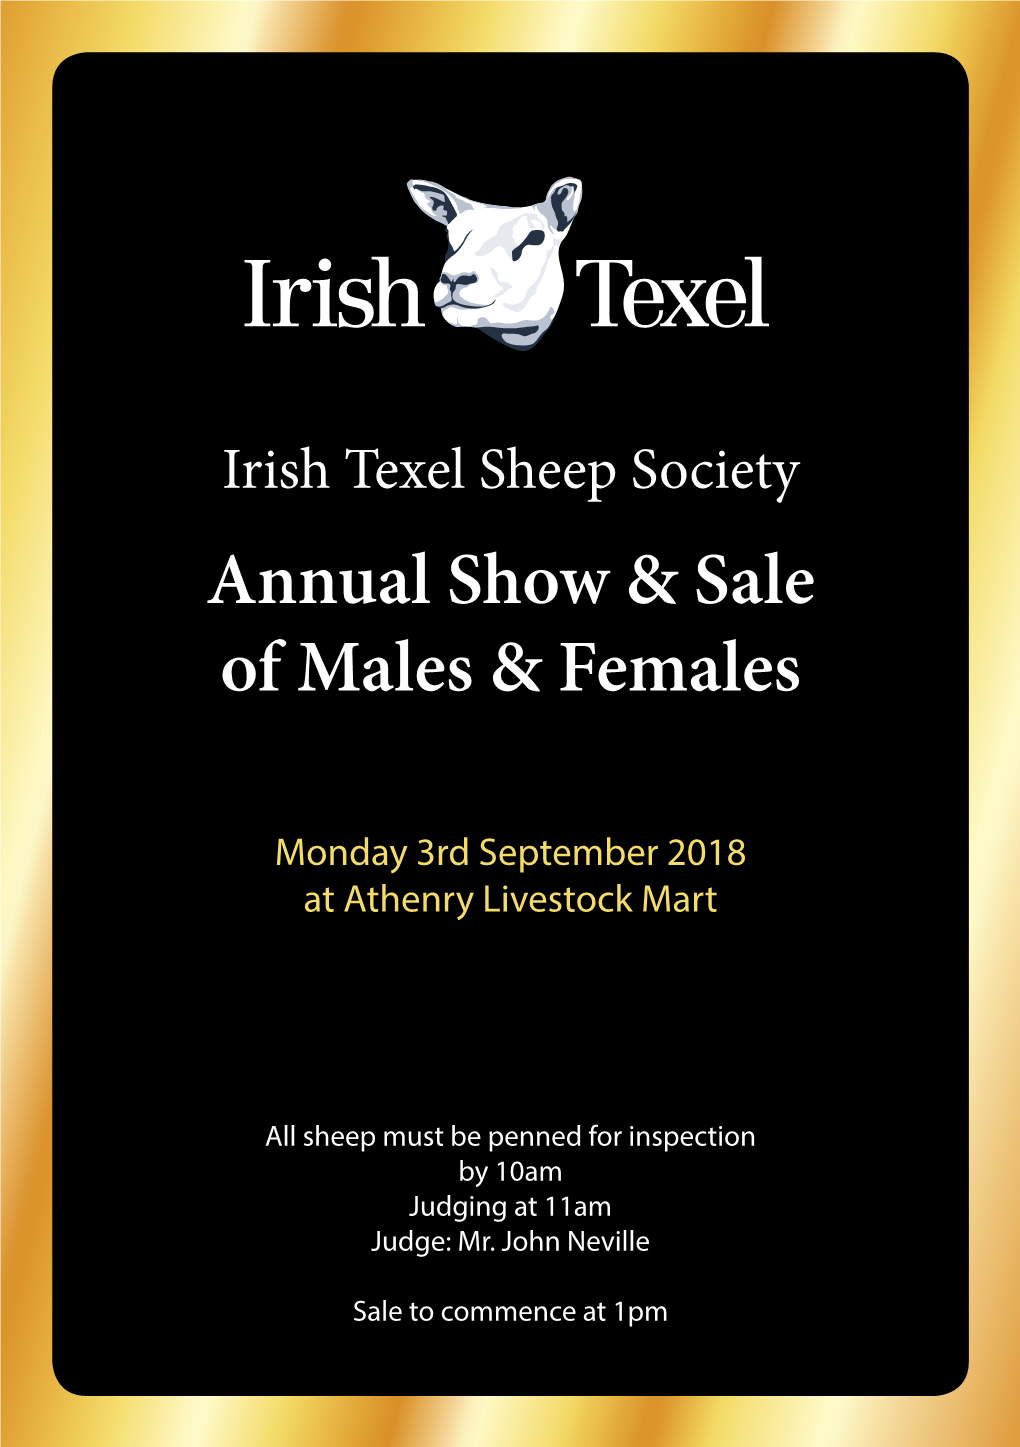 Irish Texel Sheep Society Annual Show & Sale of Males & Females